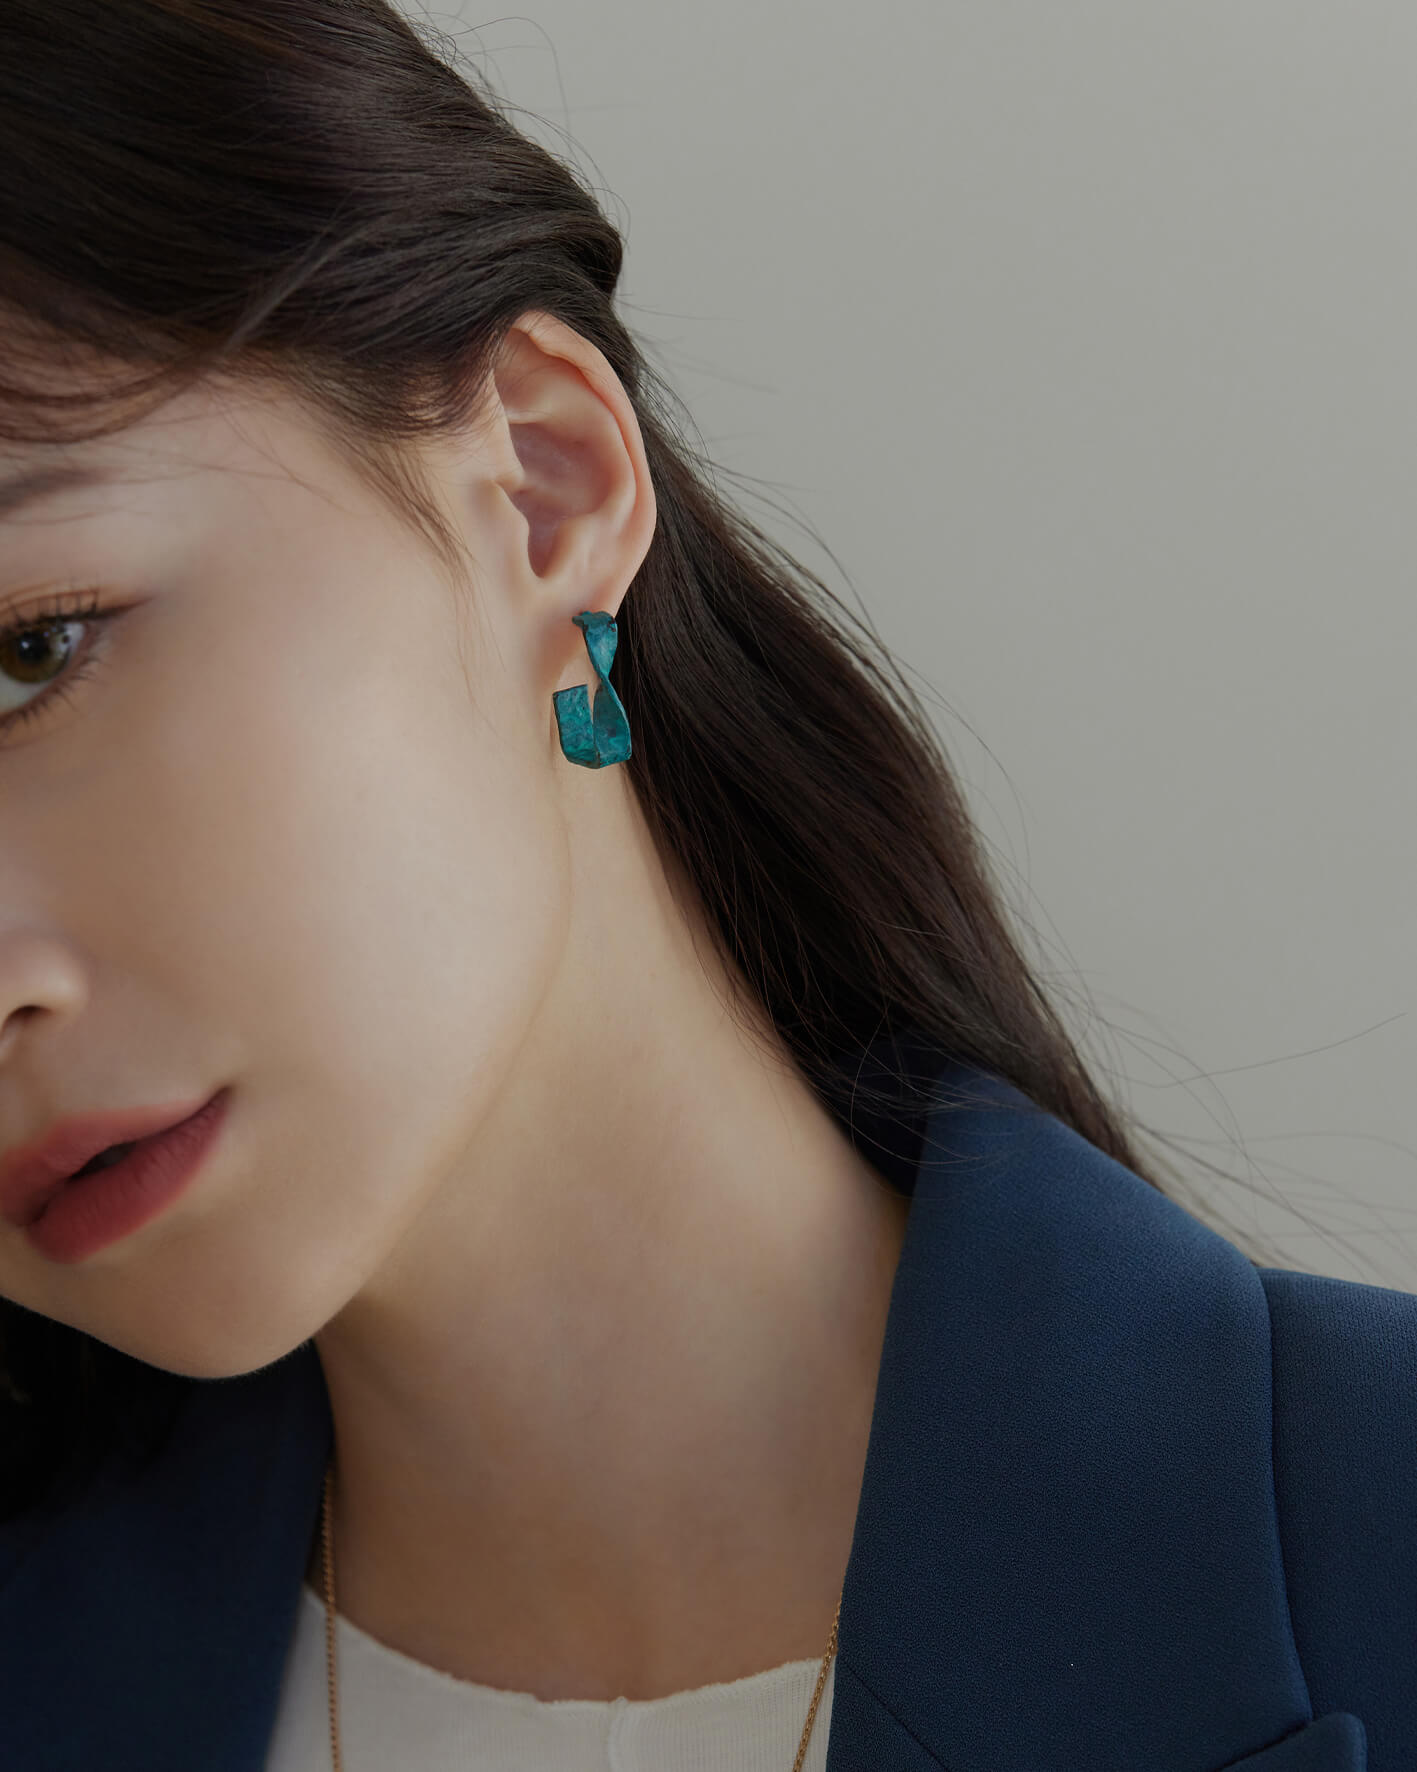 Eco安珂,韓國飾品,韓國耳環,耳針式耳環,方框耳環,藍綠色耳環,仿舊耳環